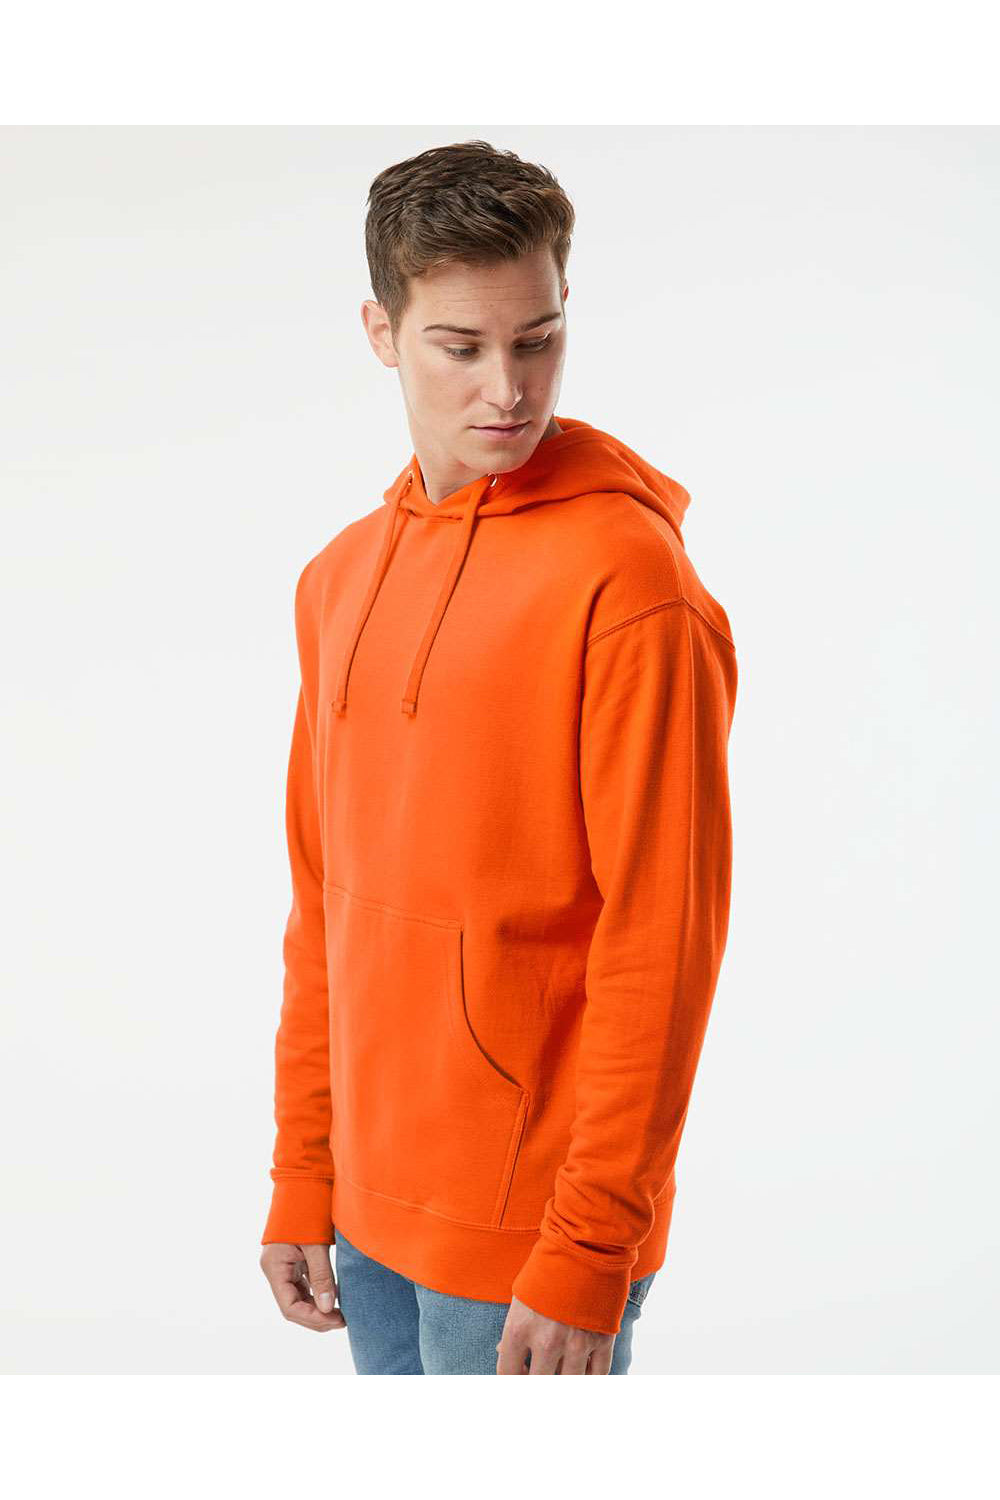 Independent Trading Co. SS4500 Mens Hooded Sweatshirt Hoodie Orange Model Side